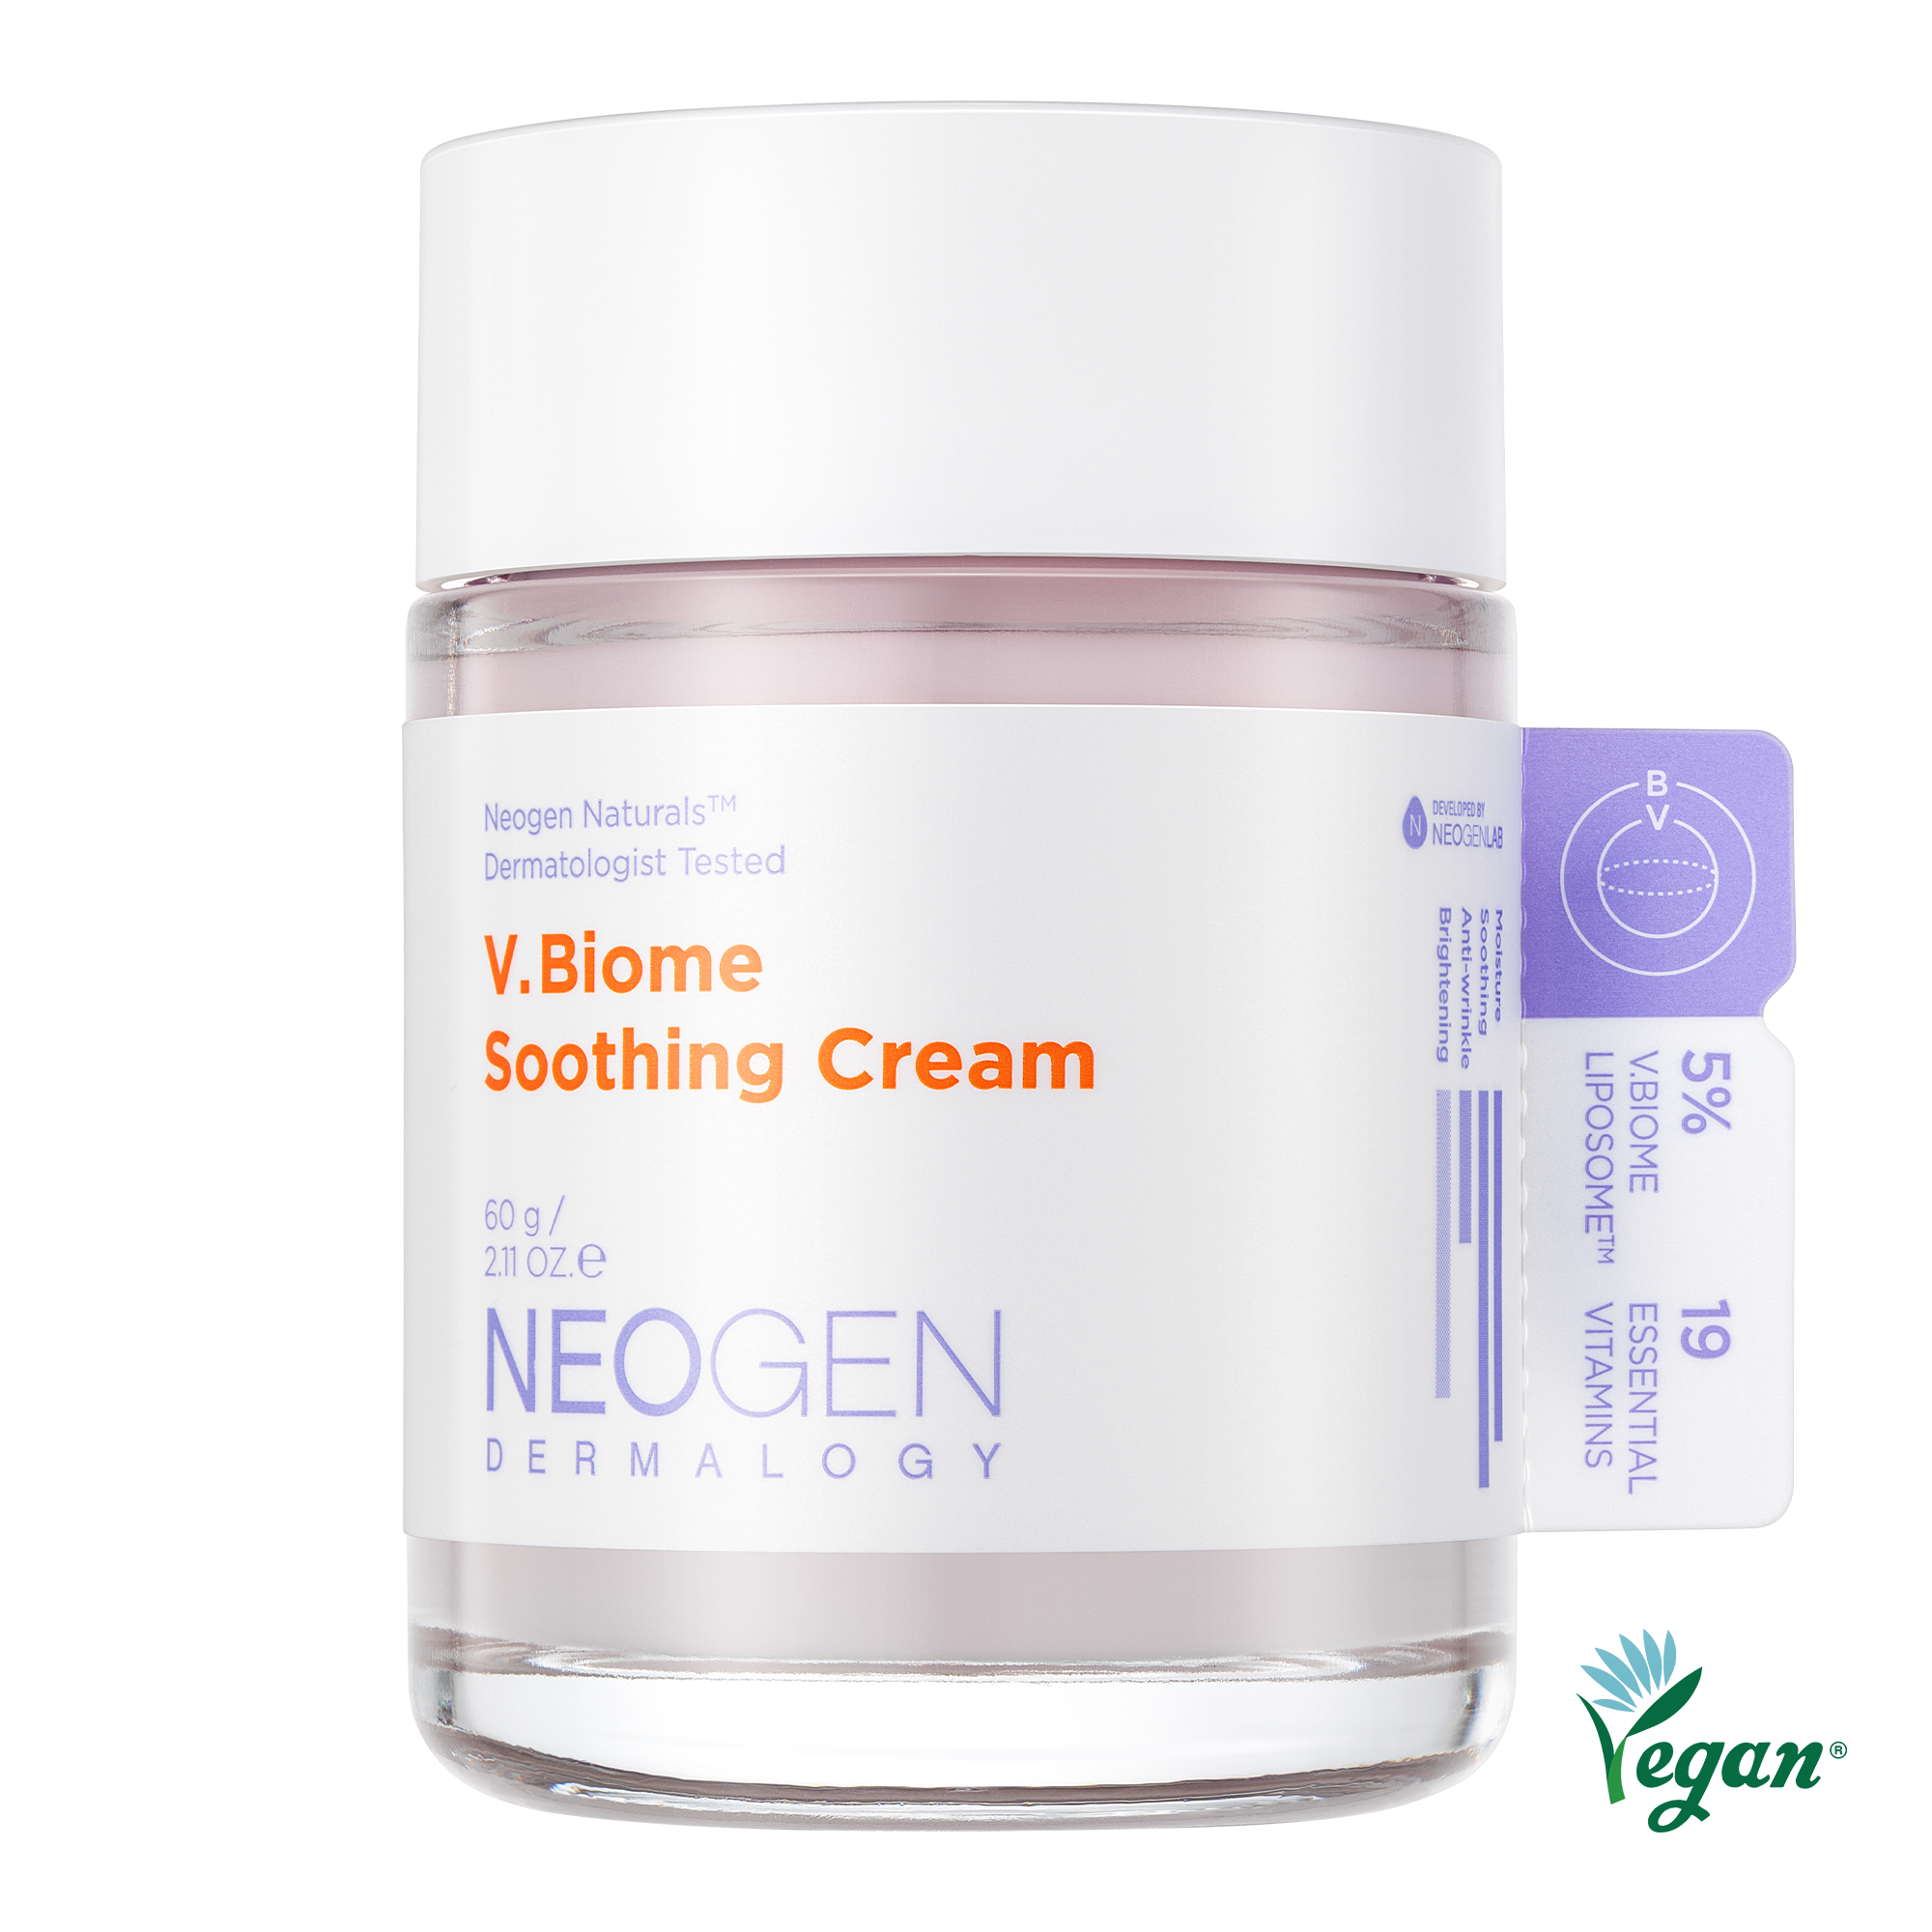 V.Biome Line Set (V.Biome Infusion Serum, V.Biome Advanced Eye Cream, V.Biome Soothing Cream, V.biome Firming Cream)